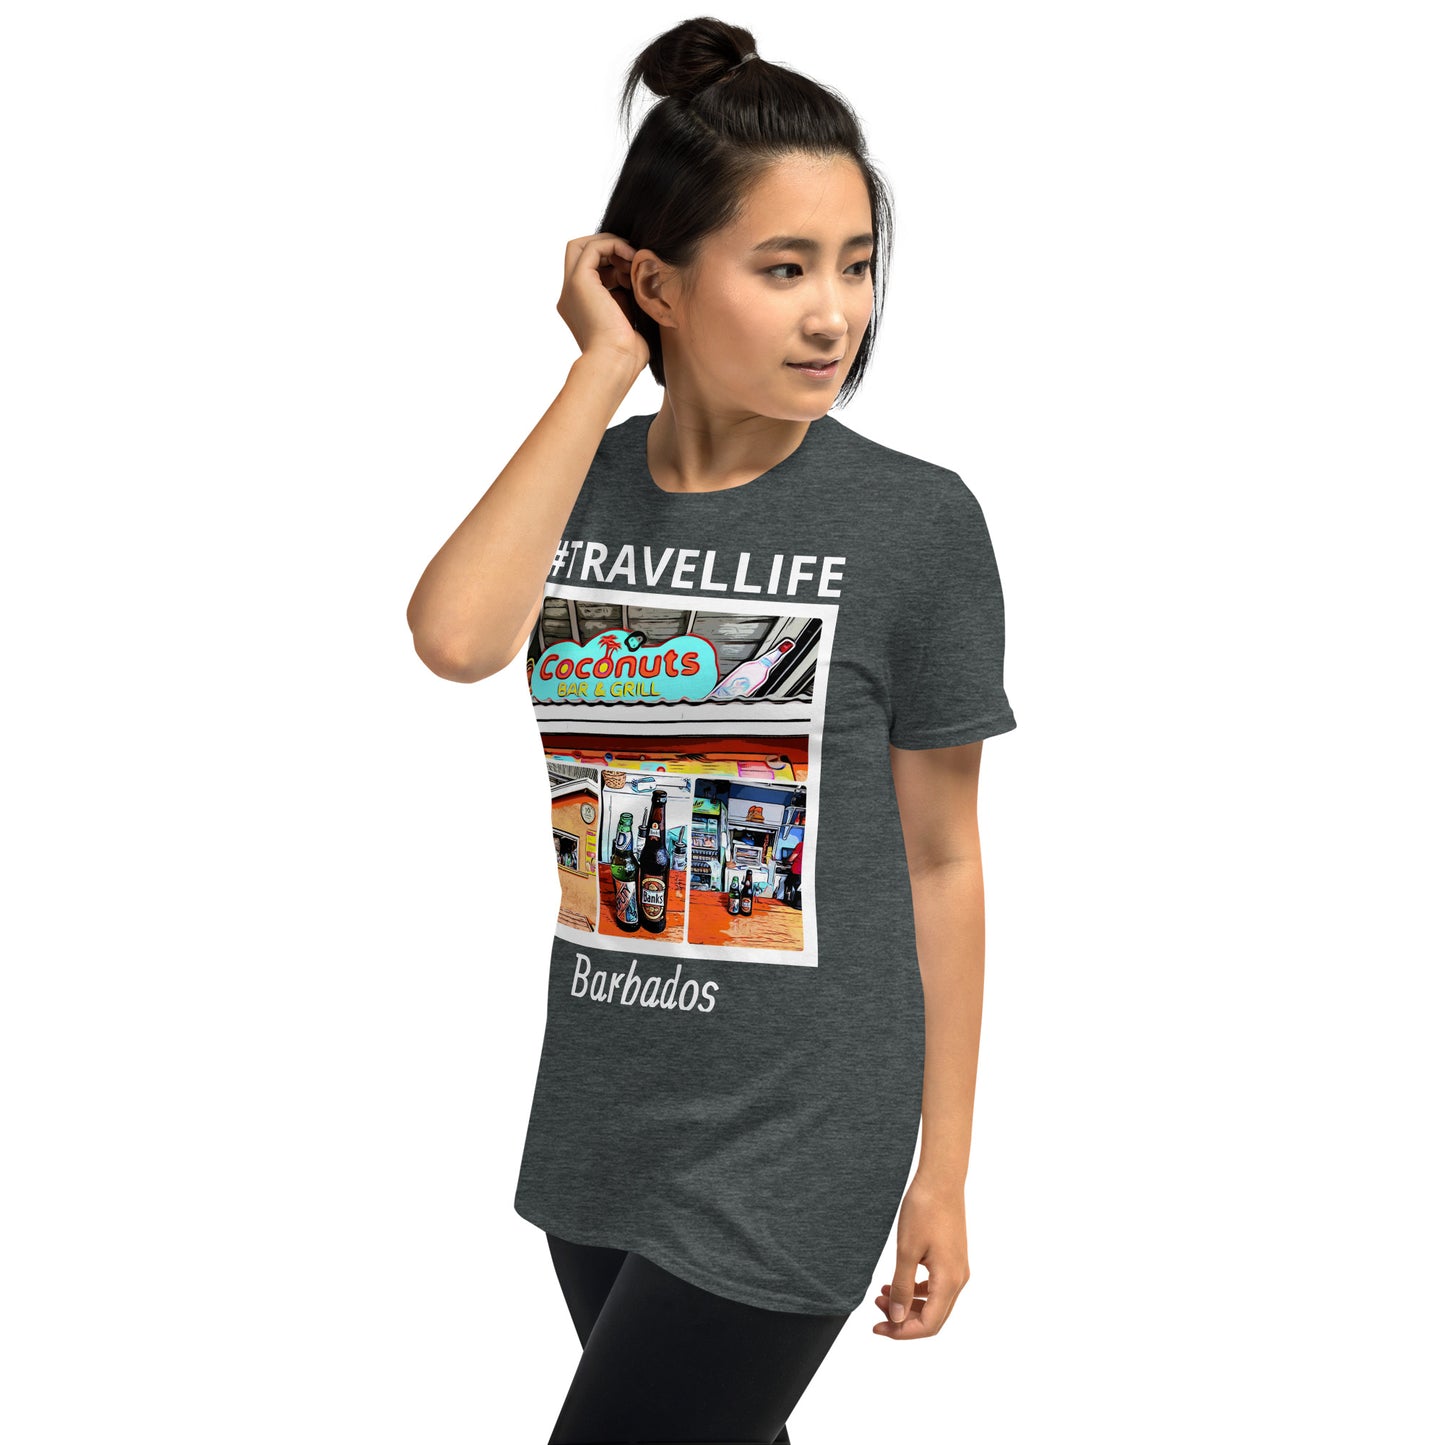 #Travellife Barbados Collage Unisex T-Shirt